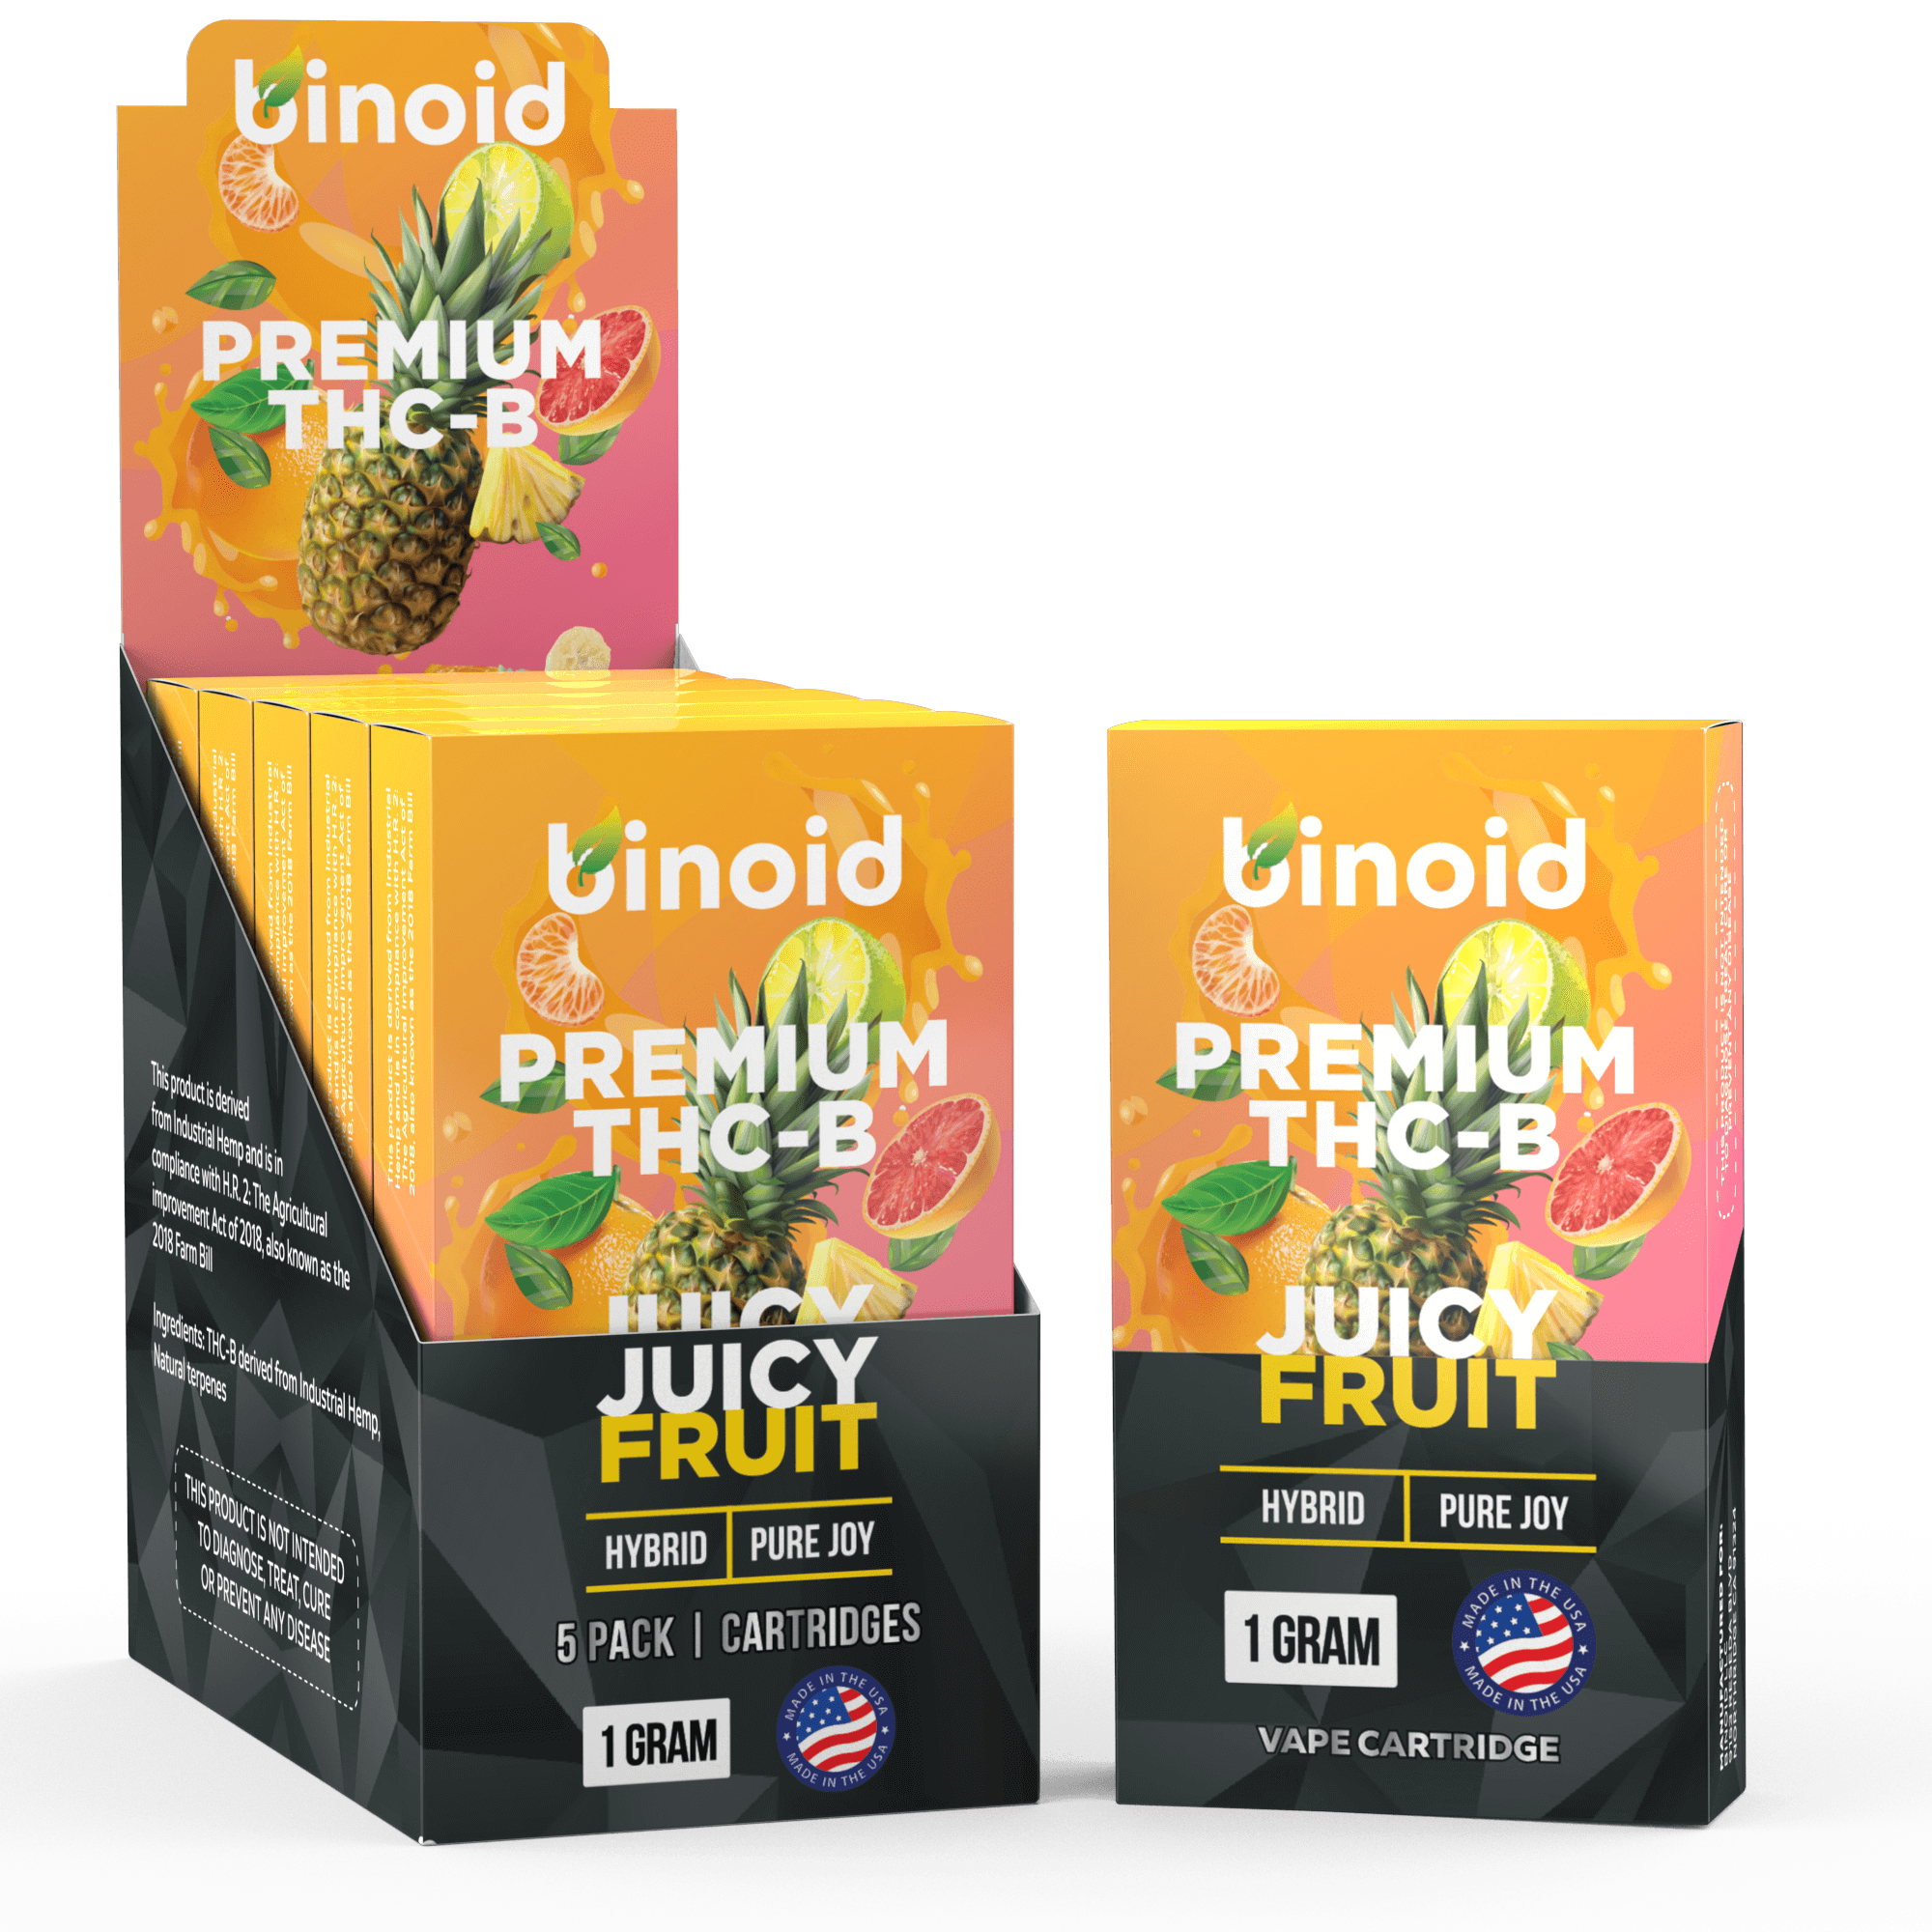 Binoid THC-B Vape Cartridge - Juicy Fruit Best Price